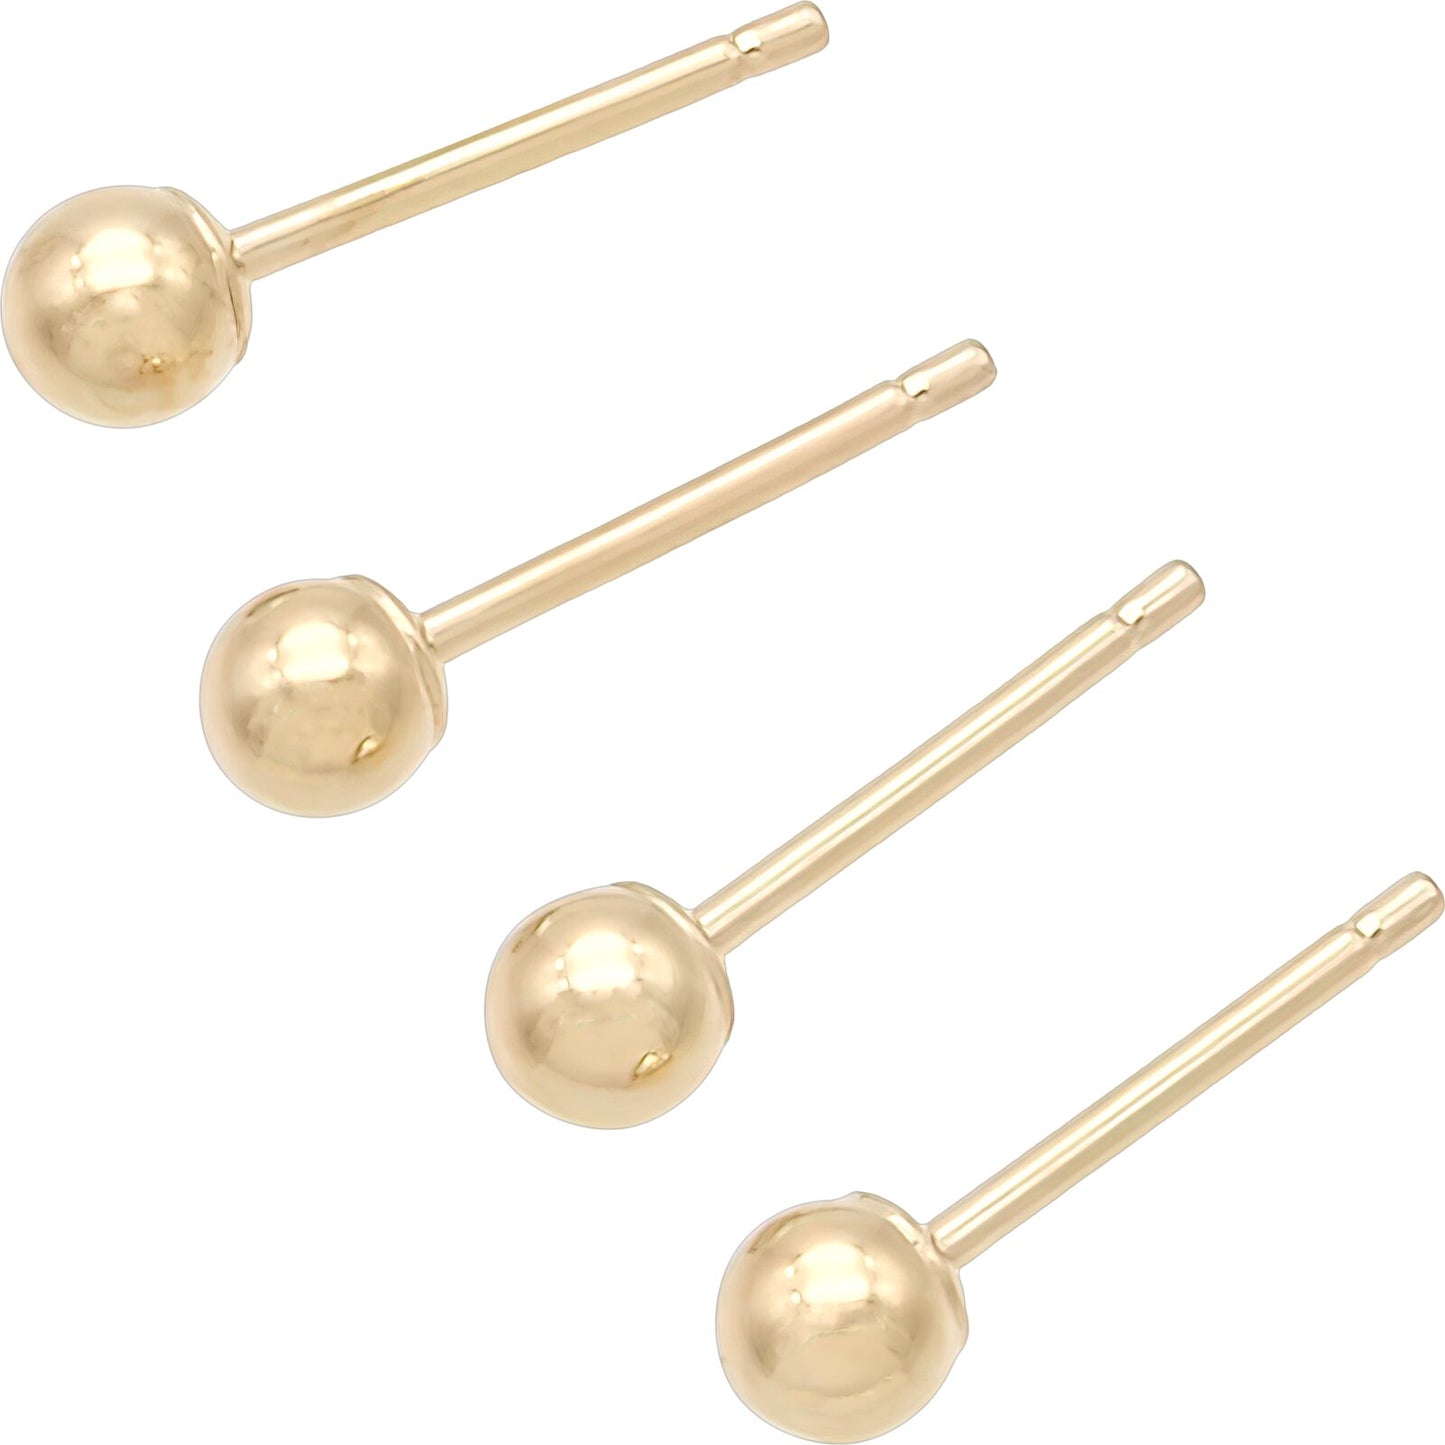 Ball Stud Earrings 14k Gold 3mm 2 Pairs